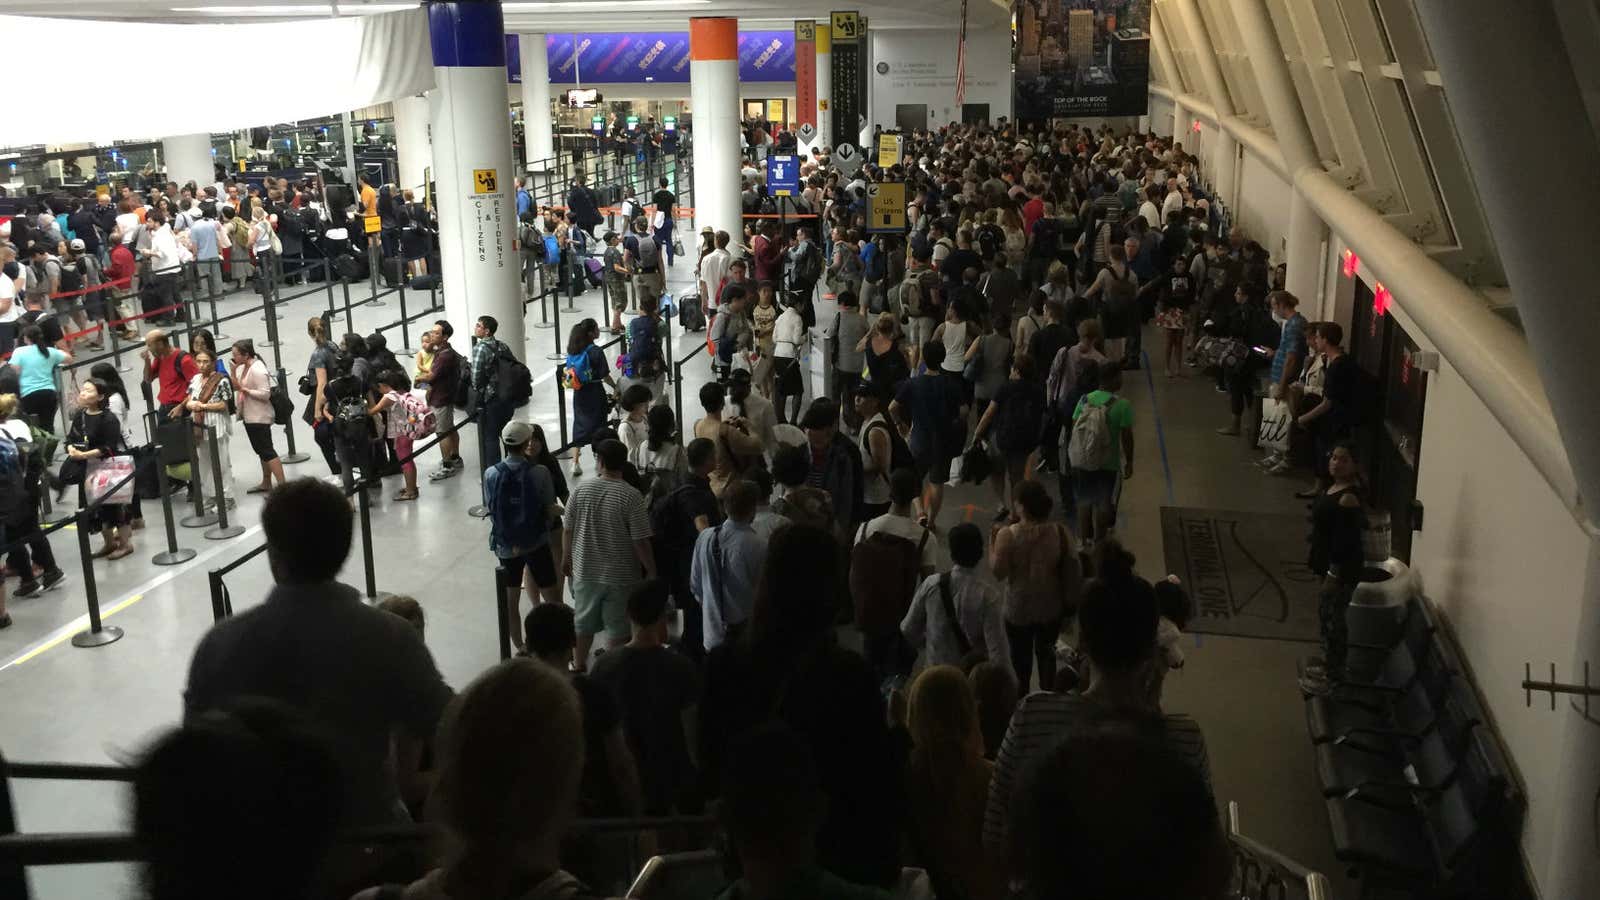 Reports of a possible shooting sent travelers scrambling at New York’s JFK airport